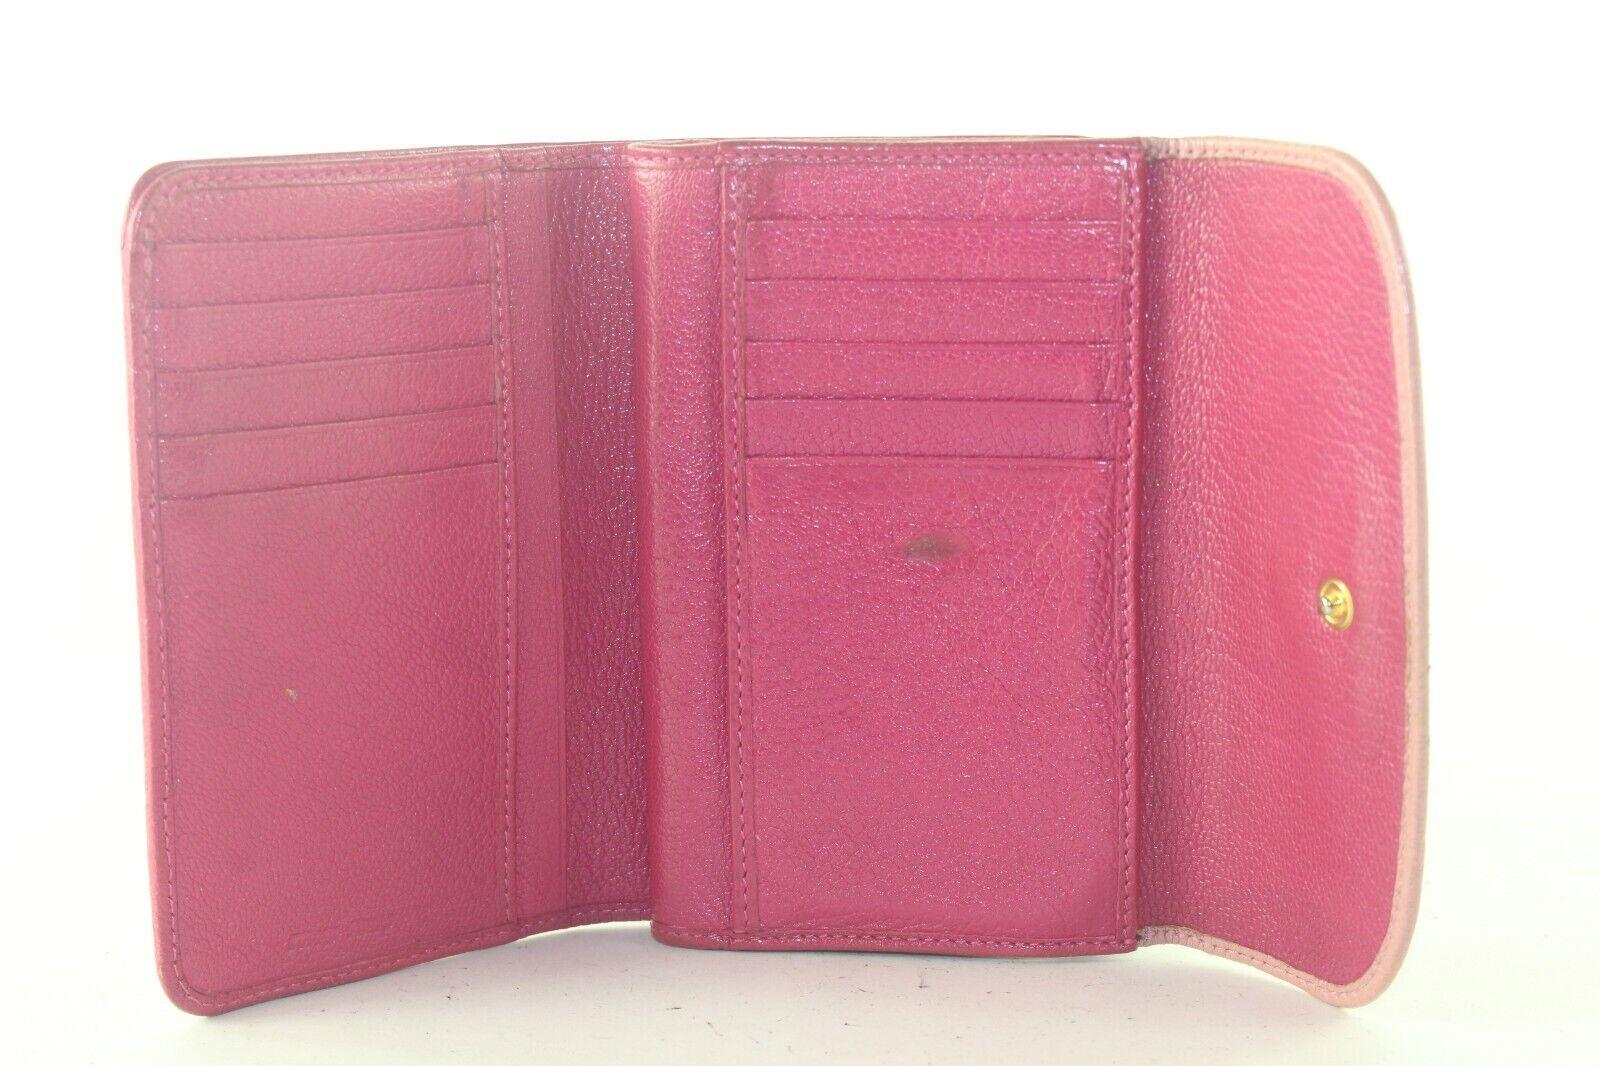 MIU MIU Pink Two Card Holder Wallet 1MIU83K For Sale 2